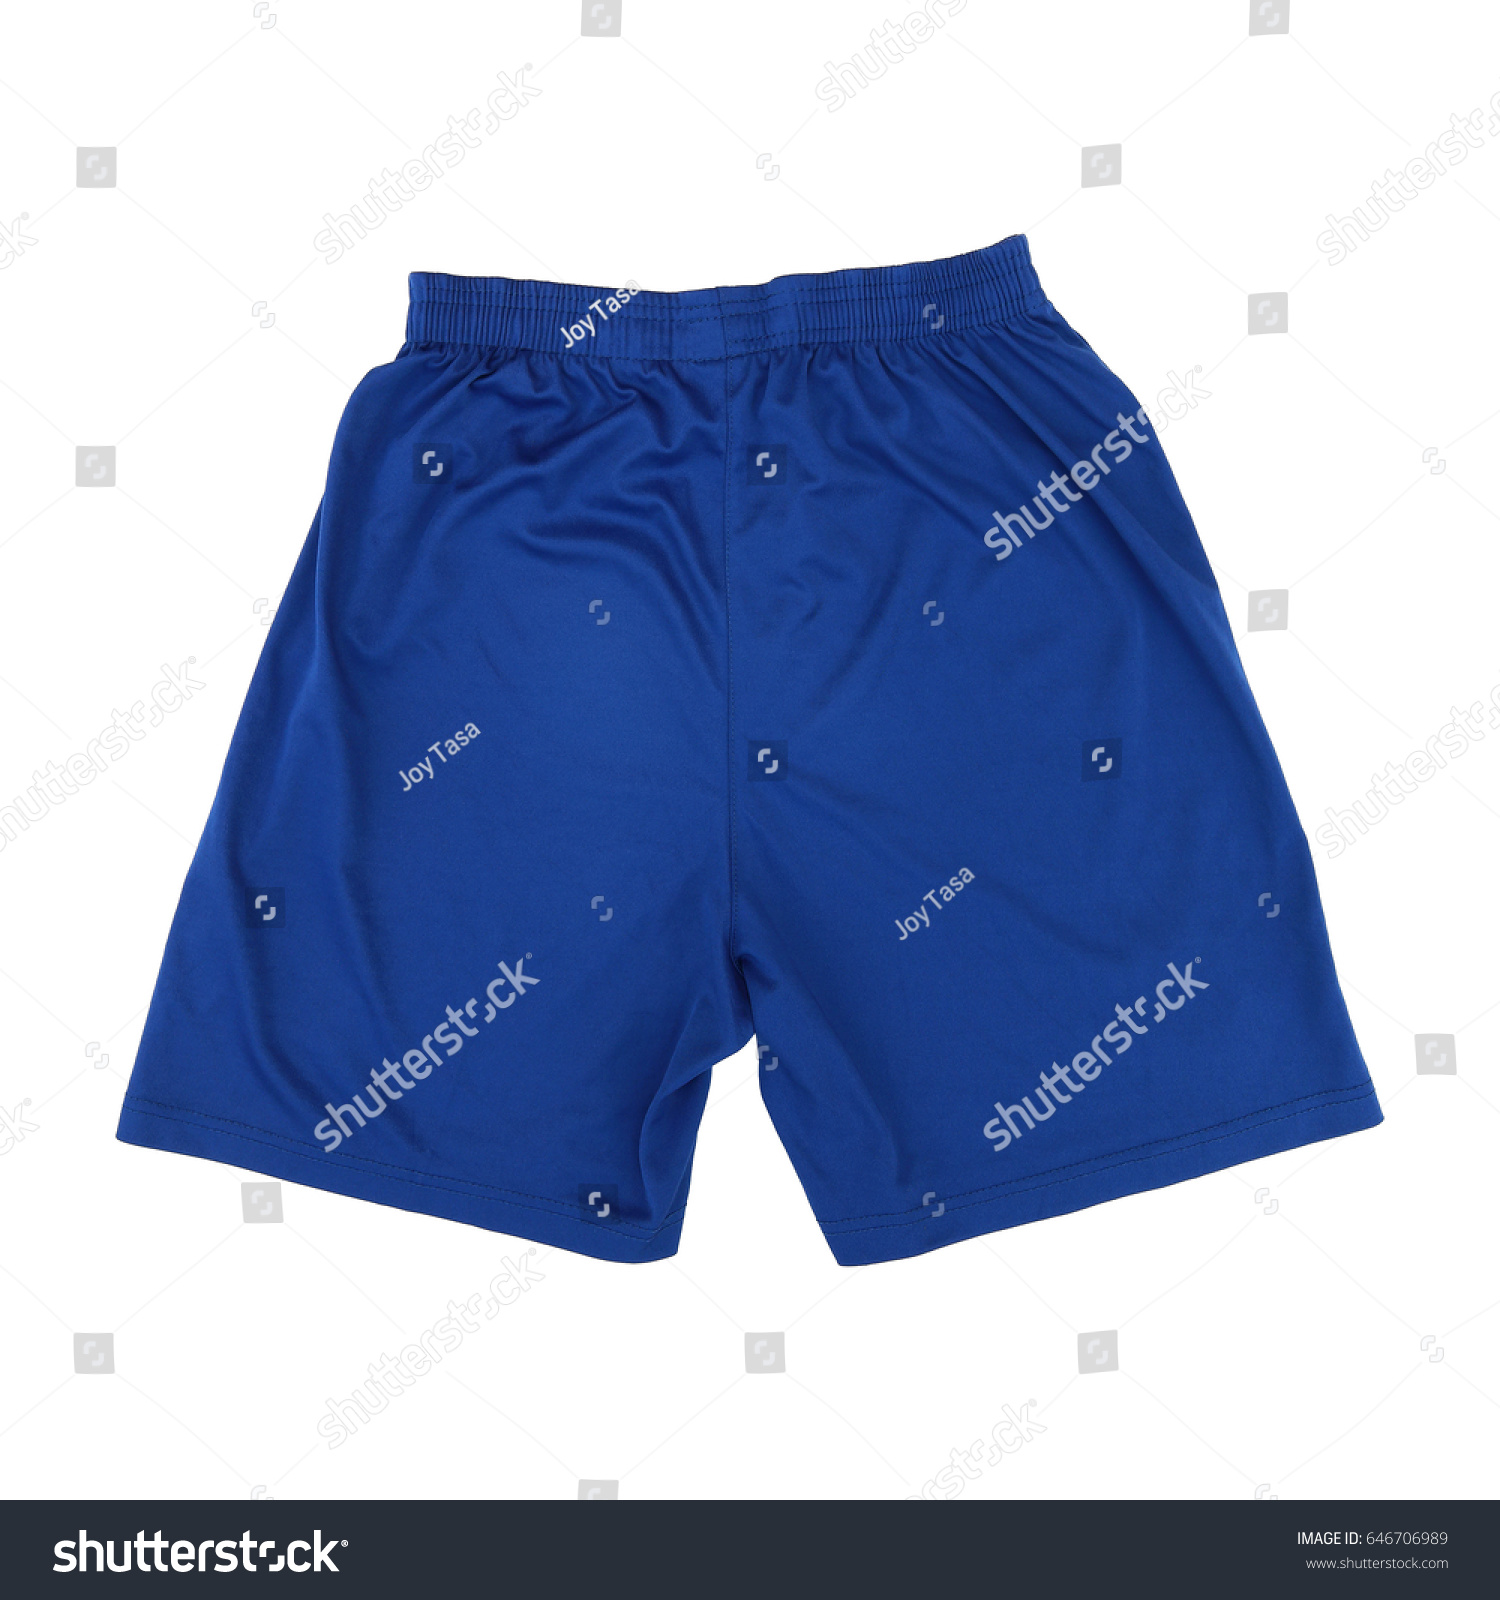 Dark Blue Sport Pants Isolated On Stock Photo 646706989 | Shutterstock